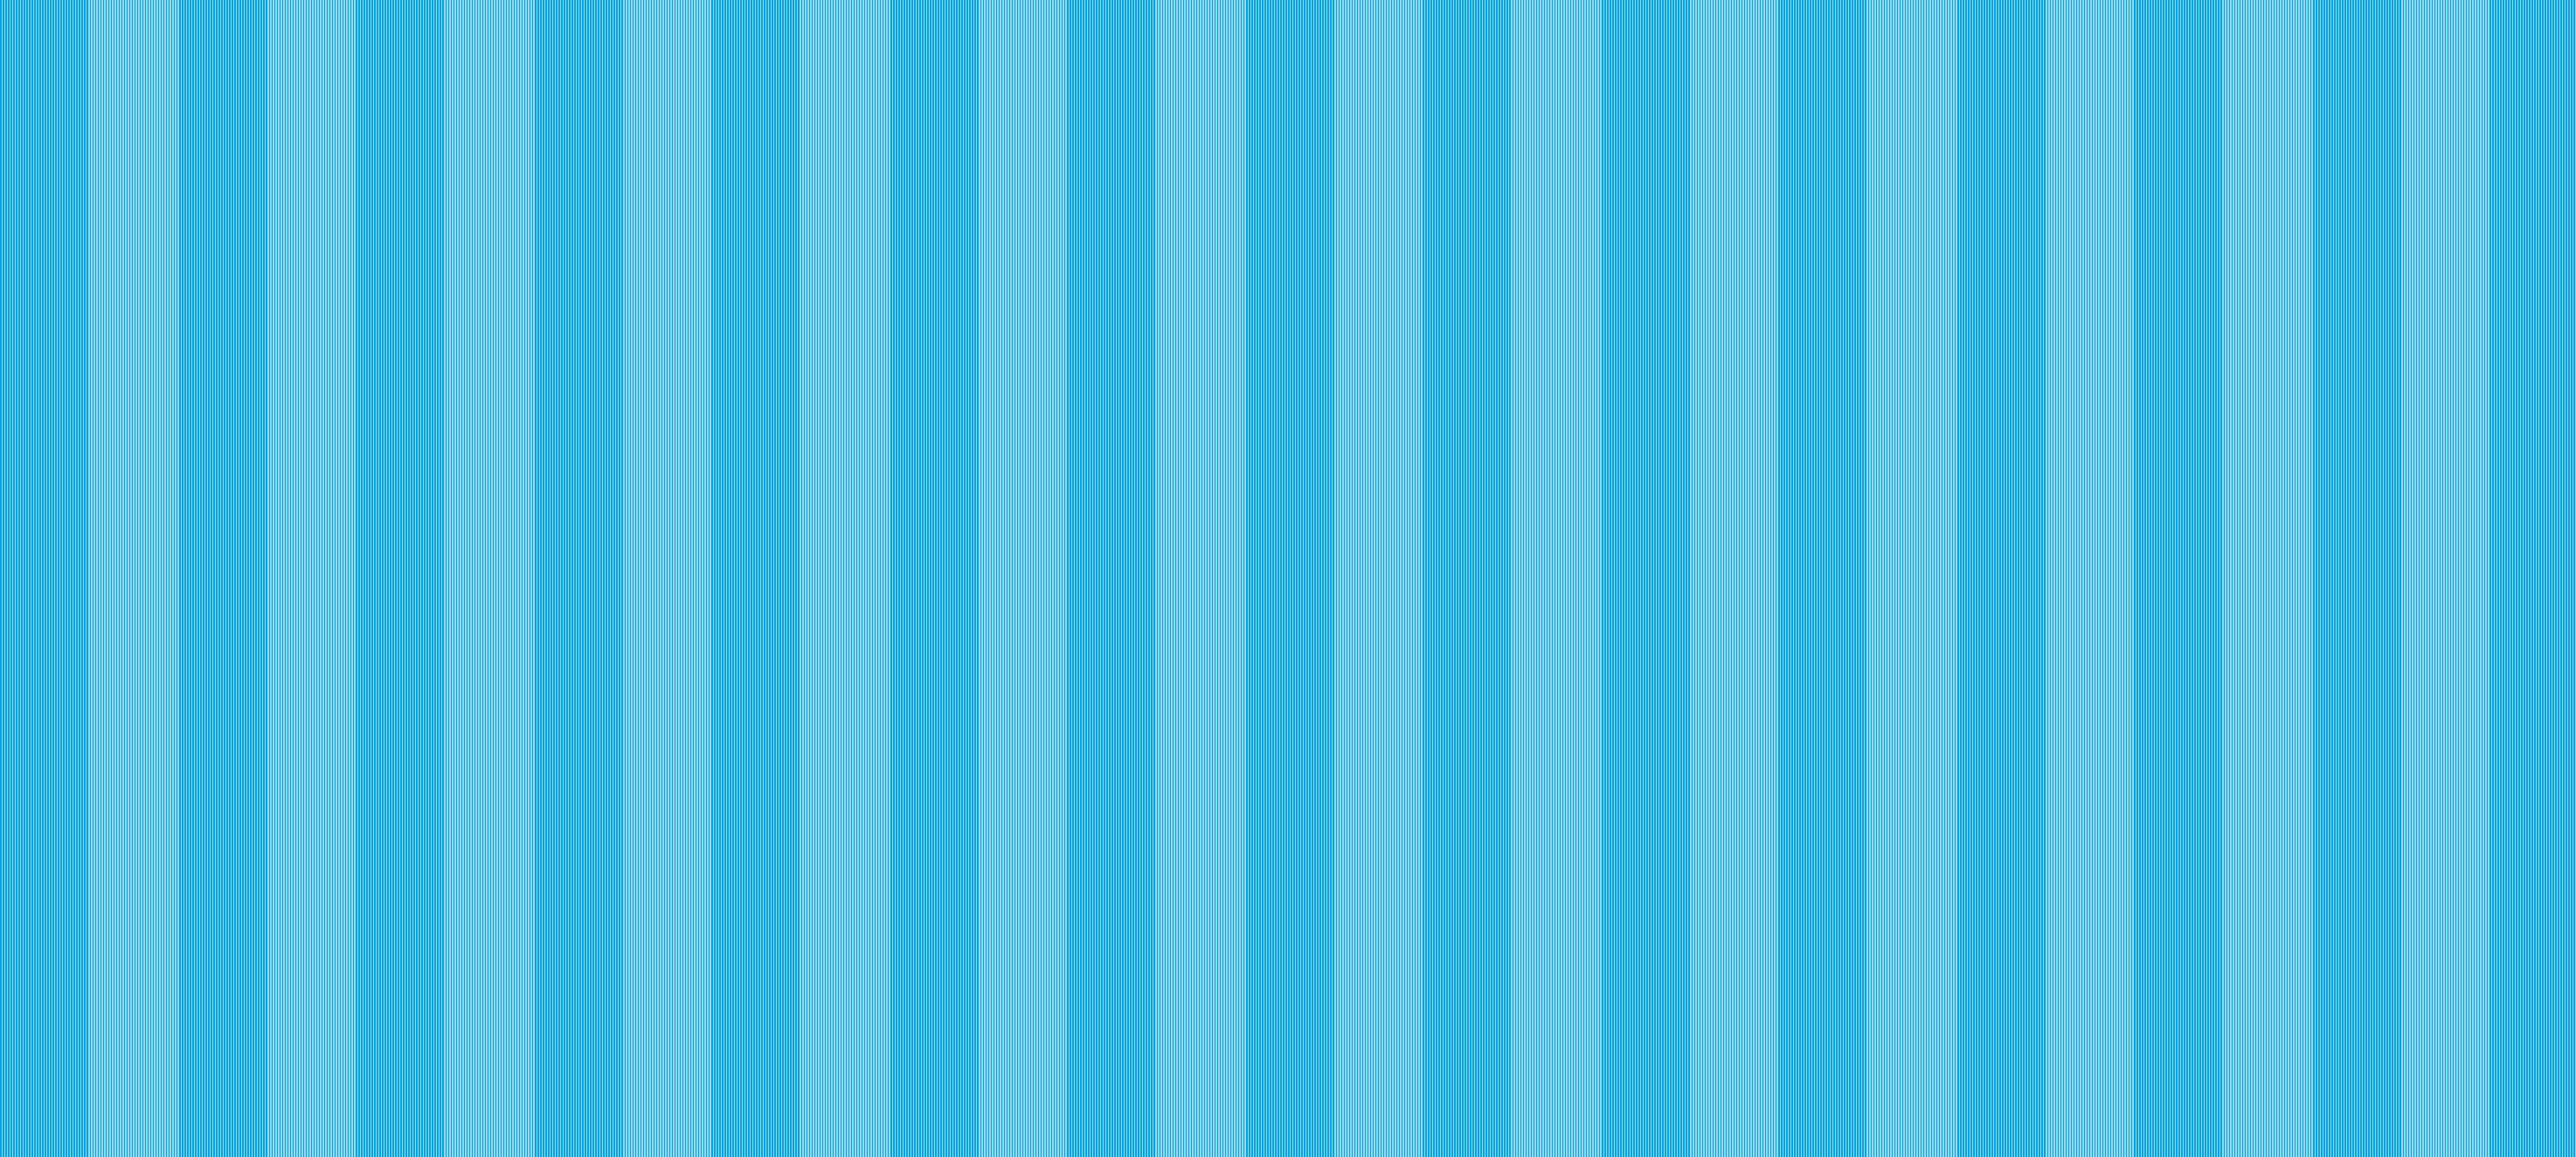 blue stripes wallpaper good for kids background light blue backdrop  vector 17275987 Vector Art at Vecteezy